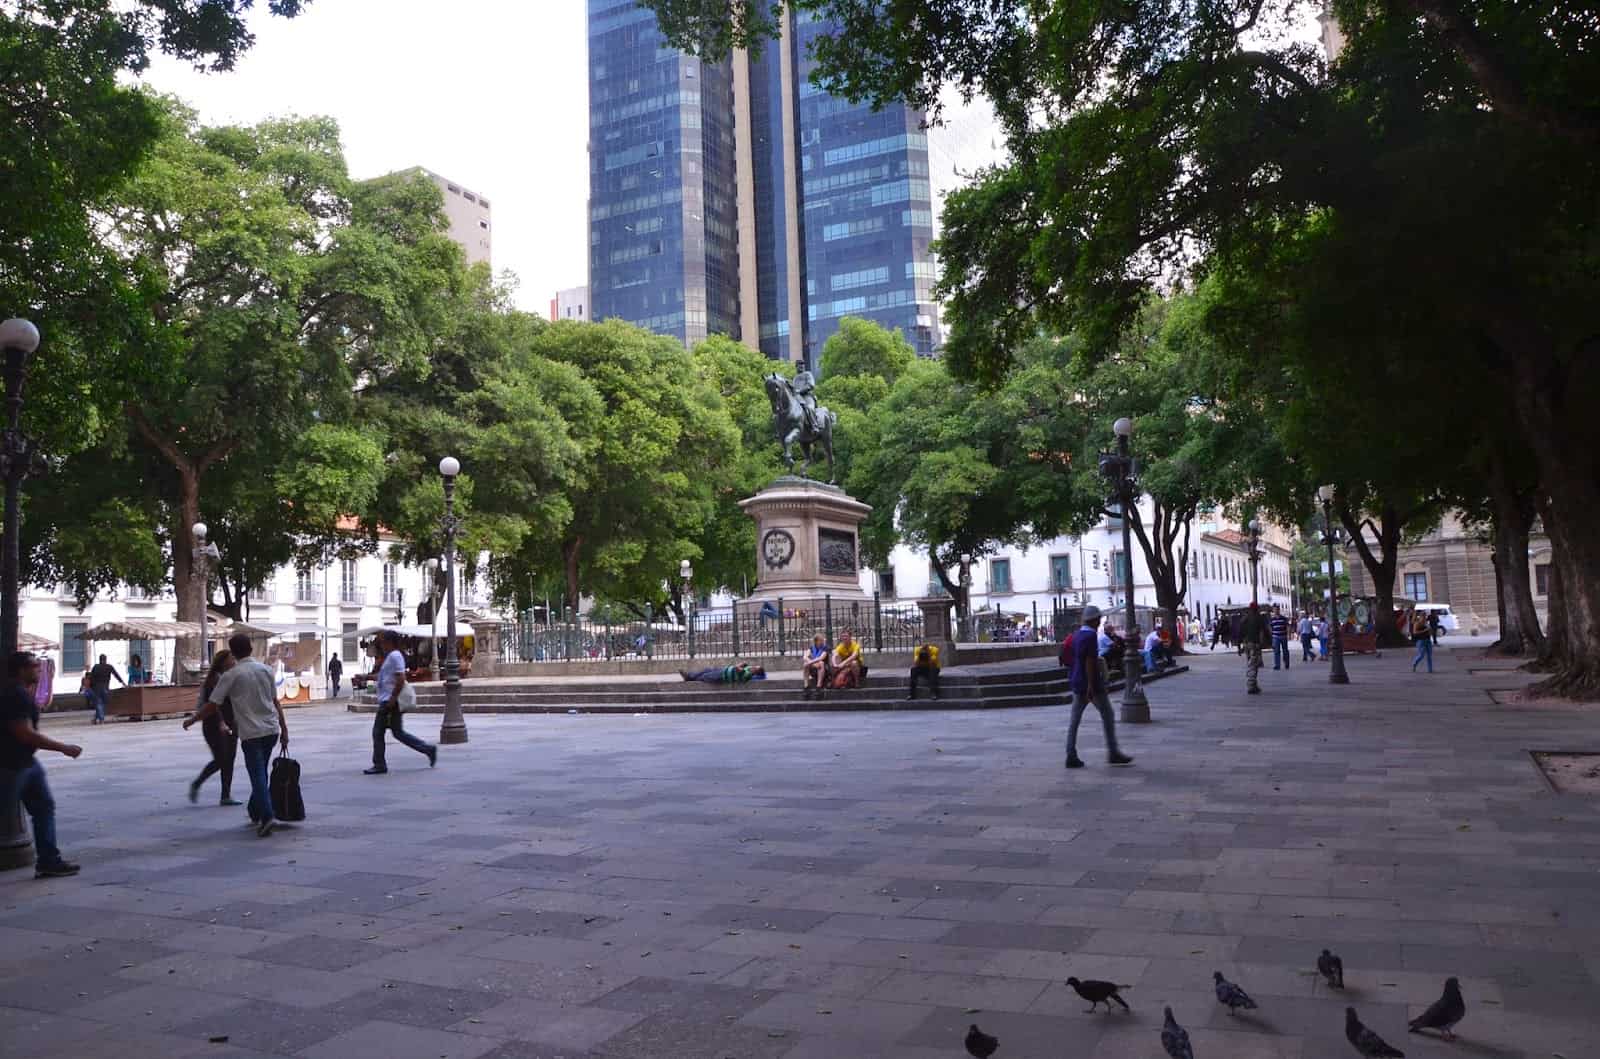 Praça XV in Rio de Janeiro, Brazil